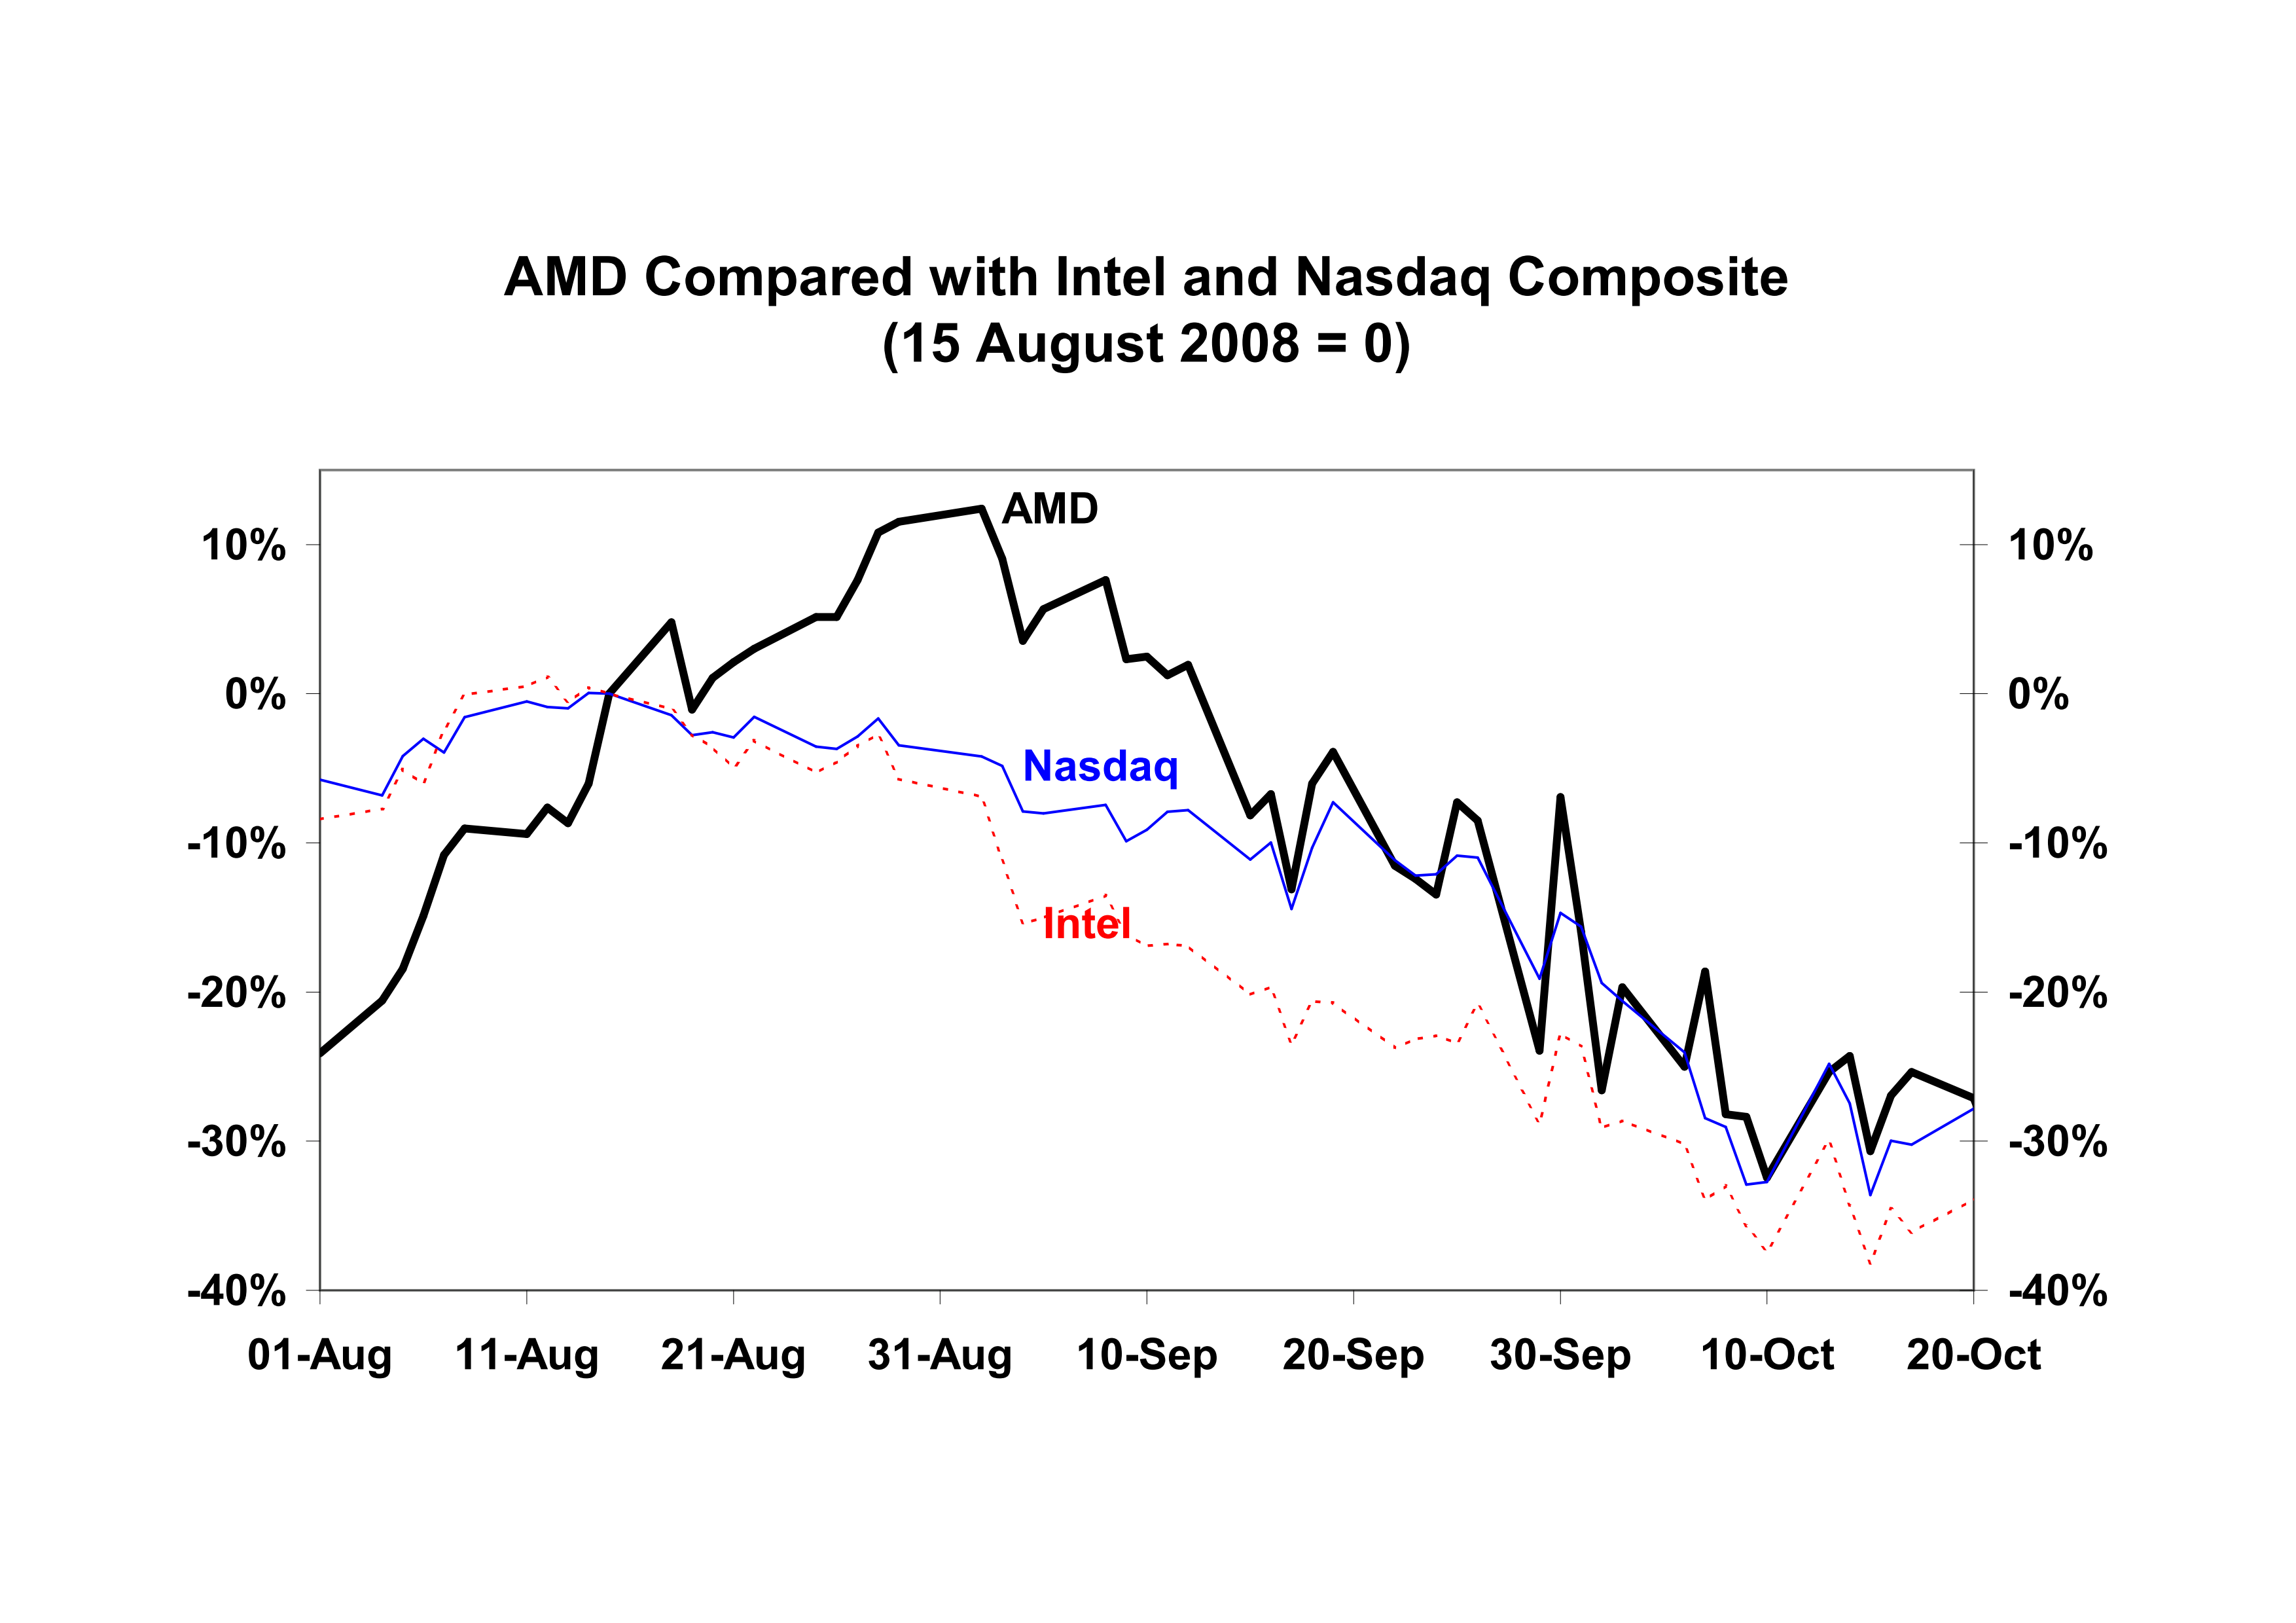 AMD versus Nasdaq price graph